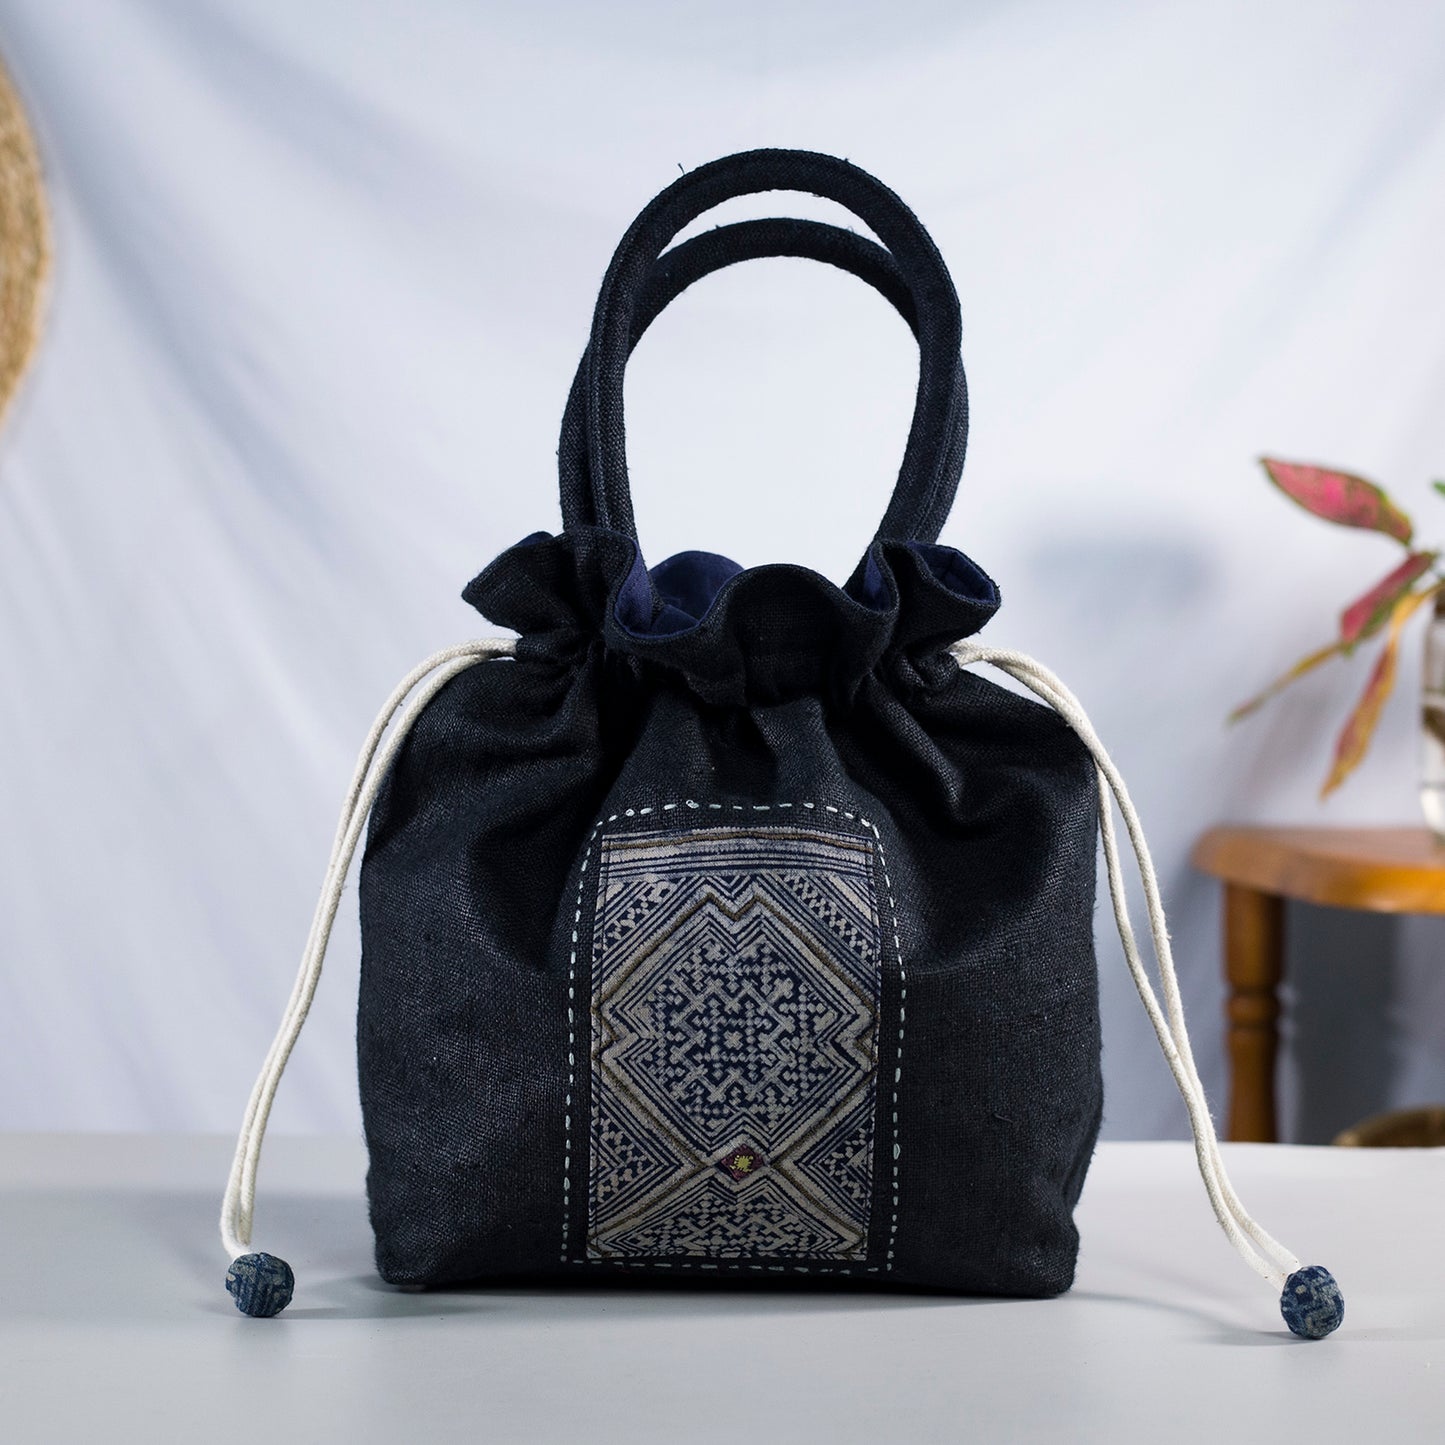 Black drawstring hemp handbag, natural hemp and batik patch